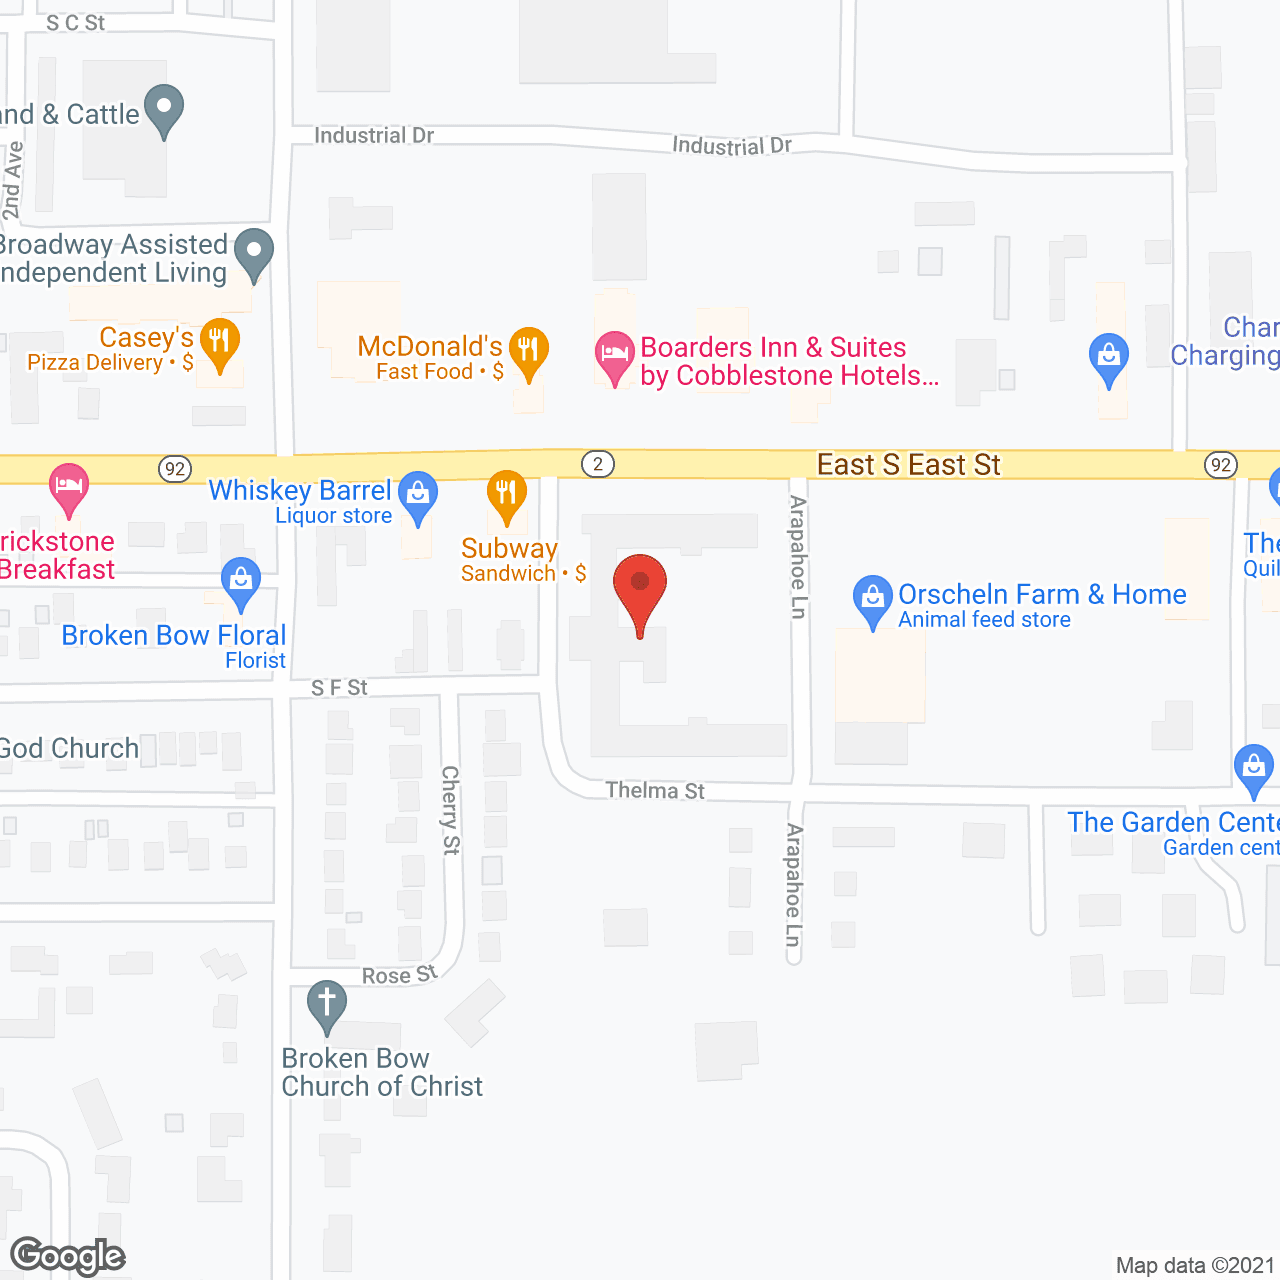 Golden LivingCenter - Broken Bow in google map